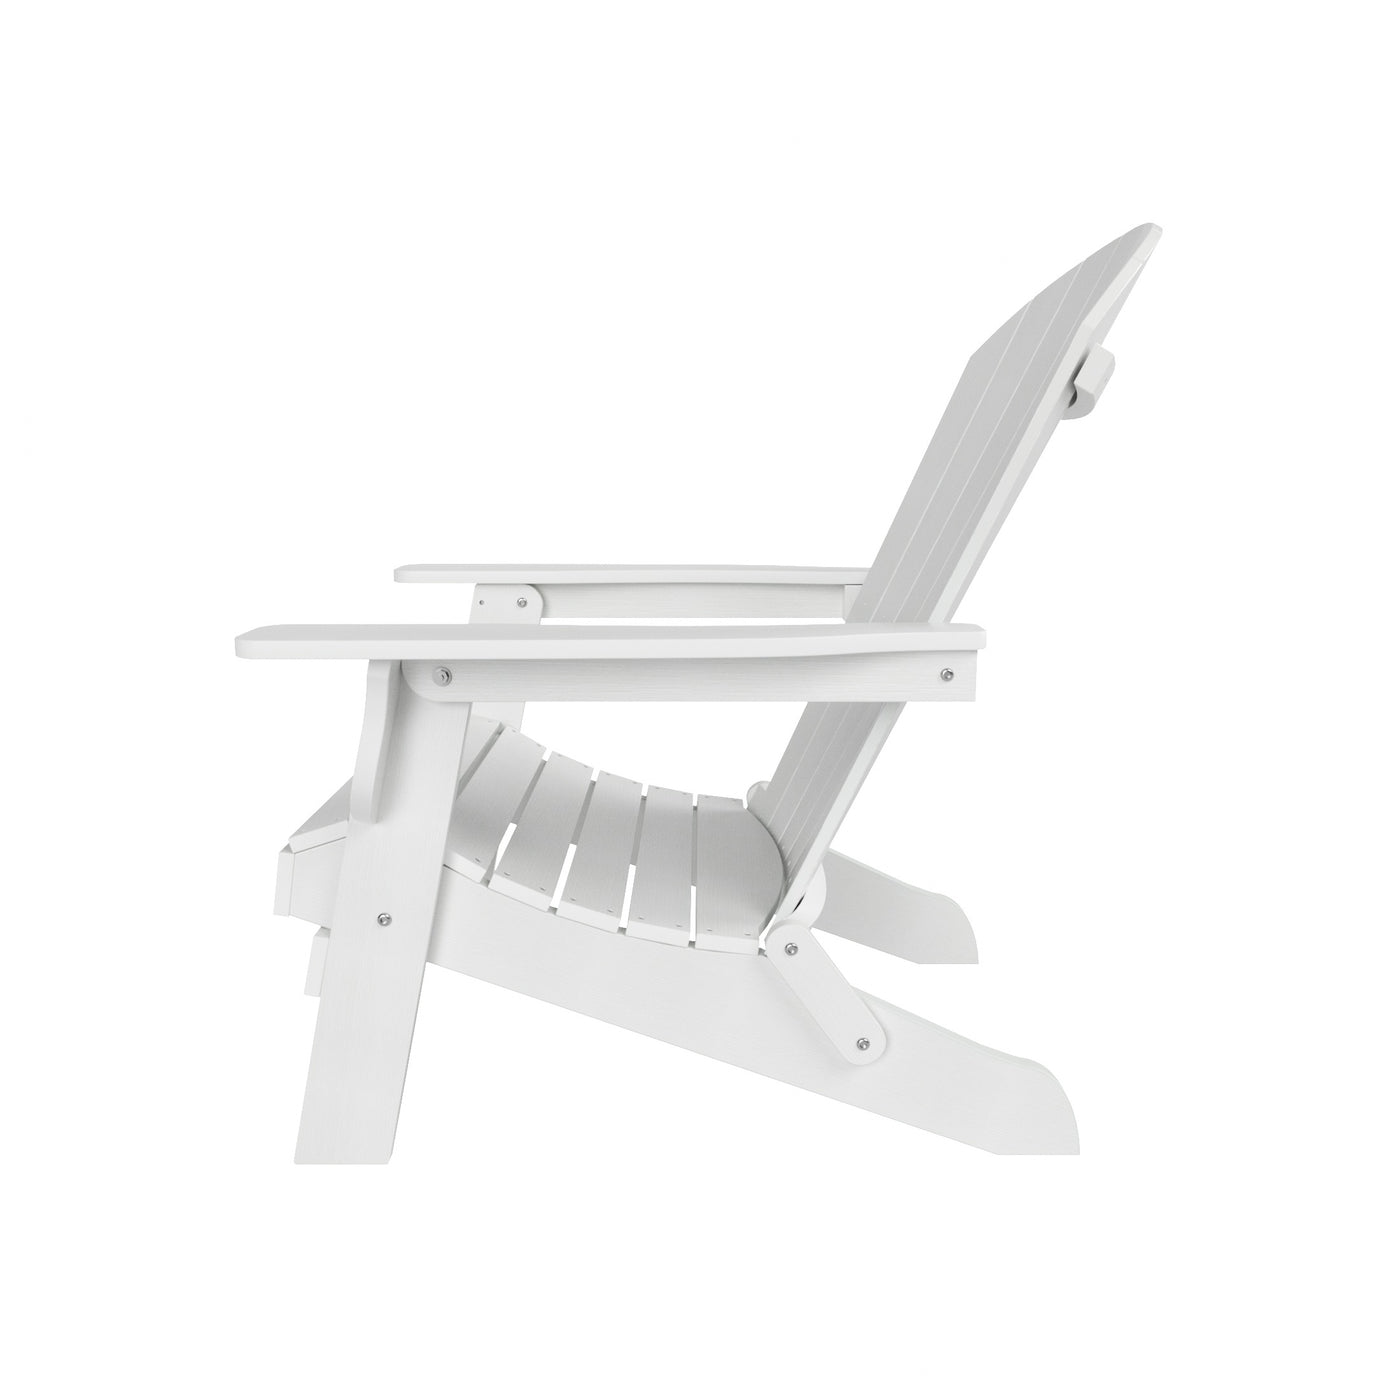 Tuscany HIPS Outdoor Folding Adirondack Chair (Set of 2)